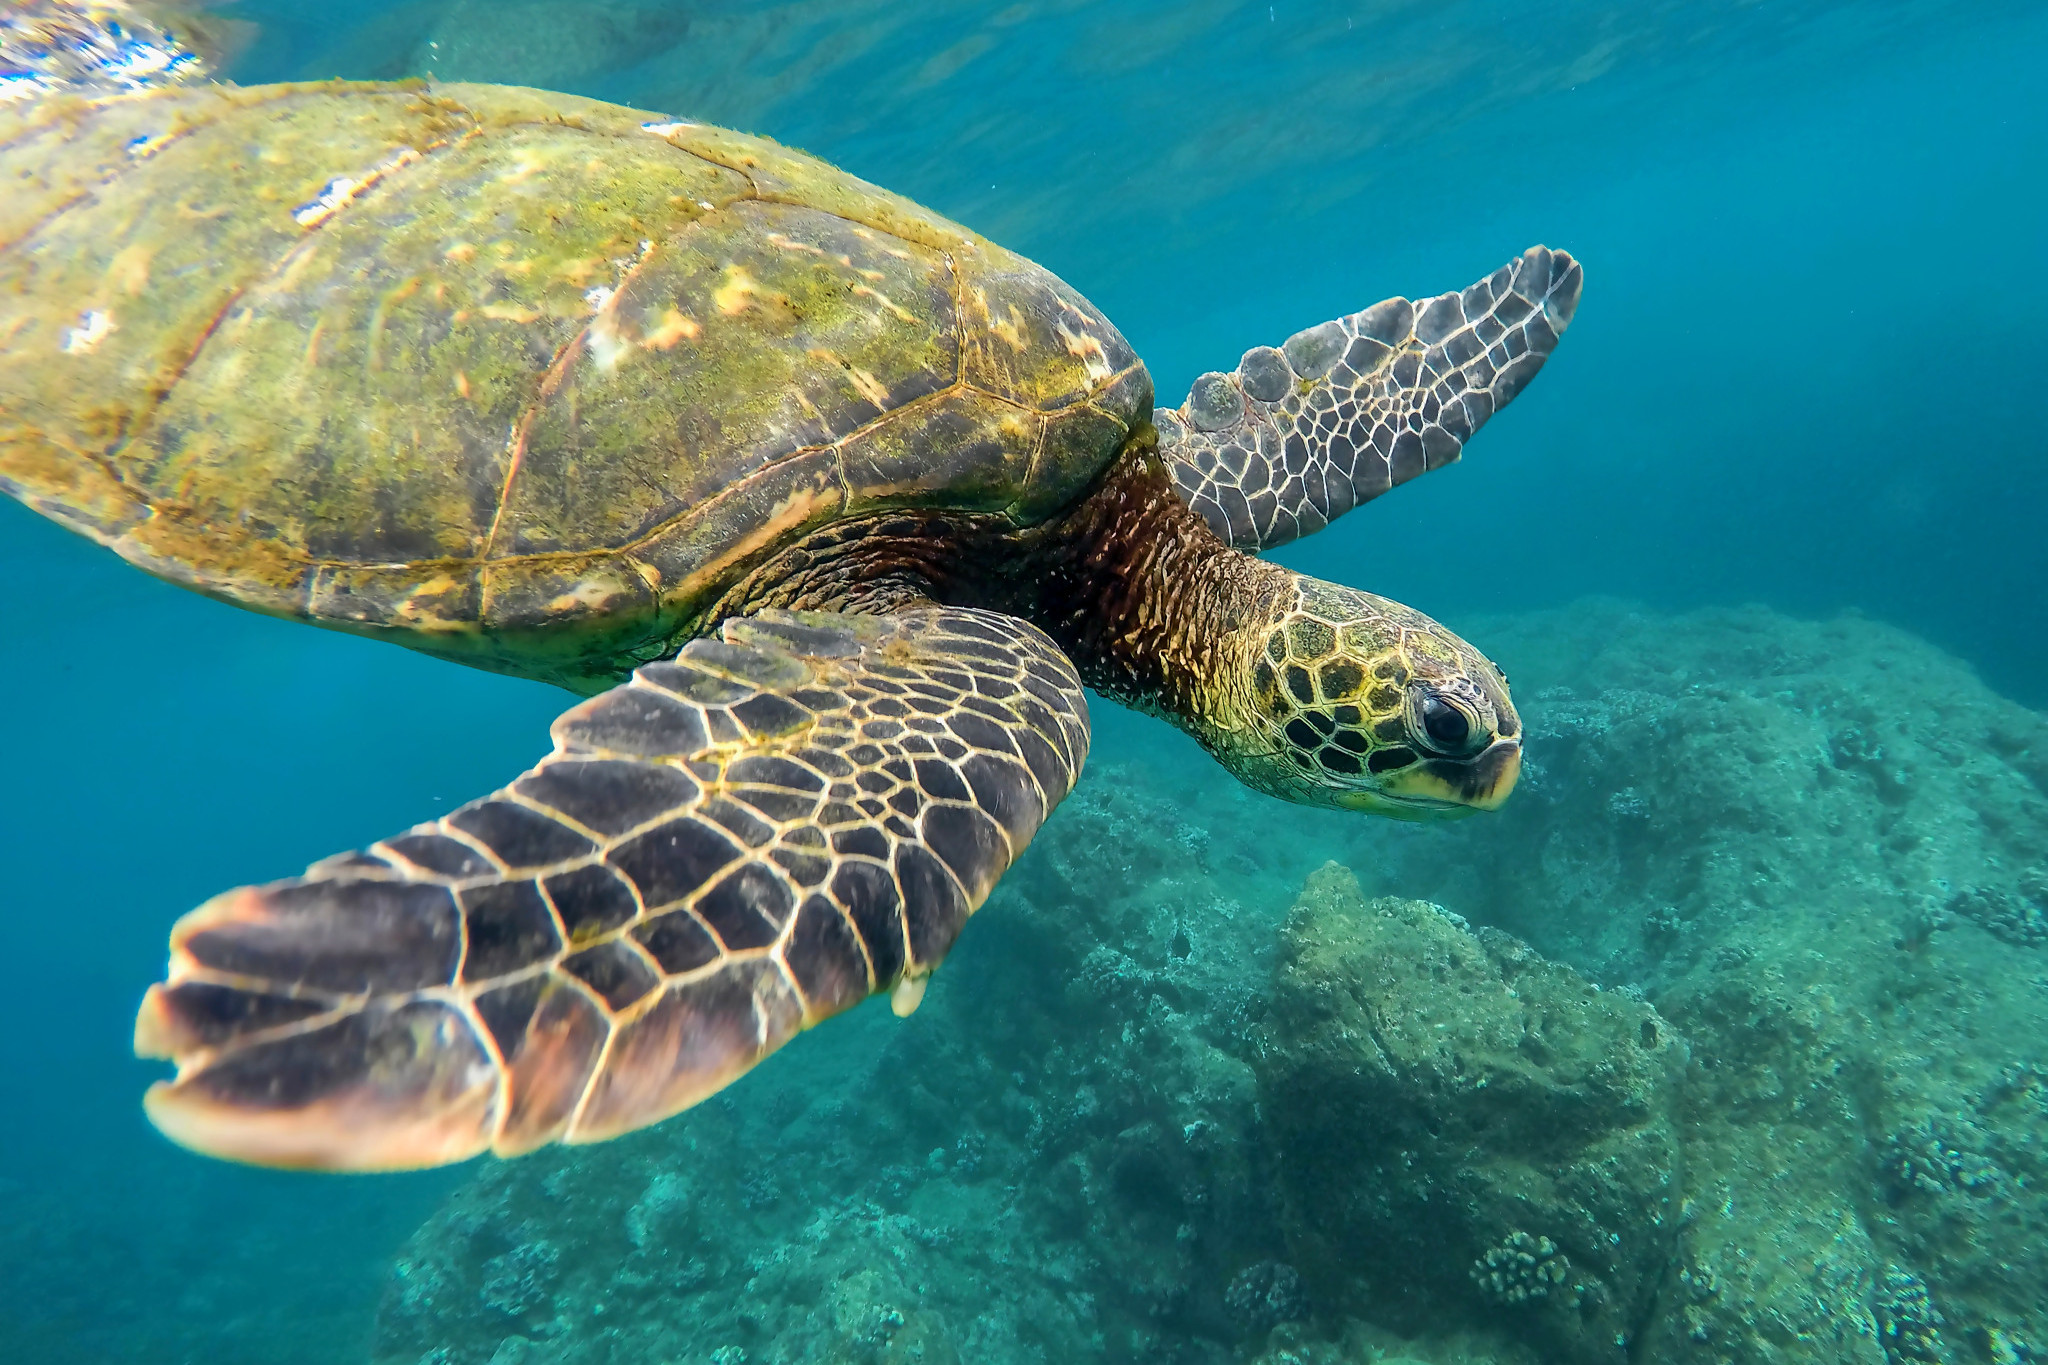 Moreton Bay’s turtle save - feature photo